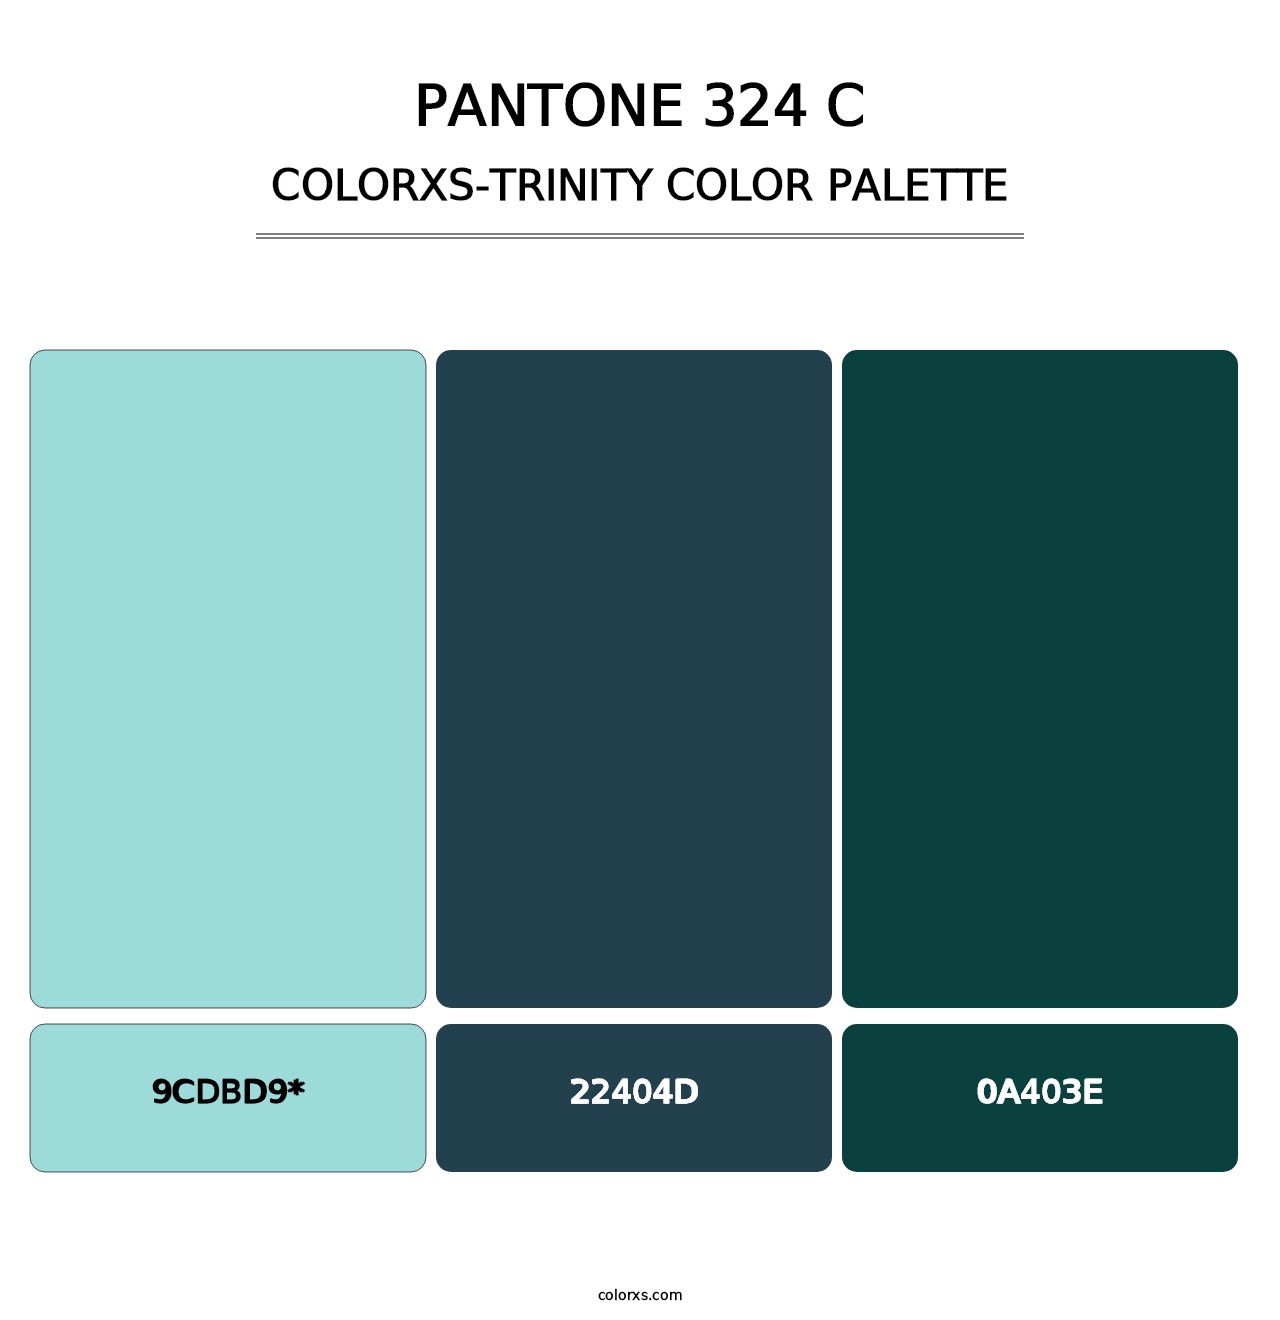 PANTONE 324 C - Colorxs Trinity Palette